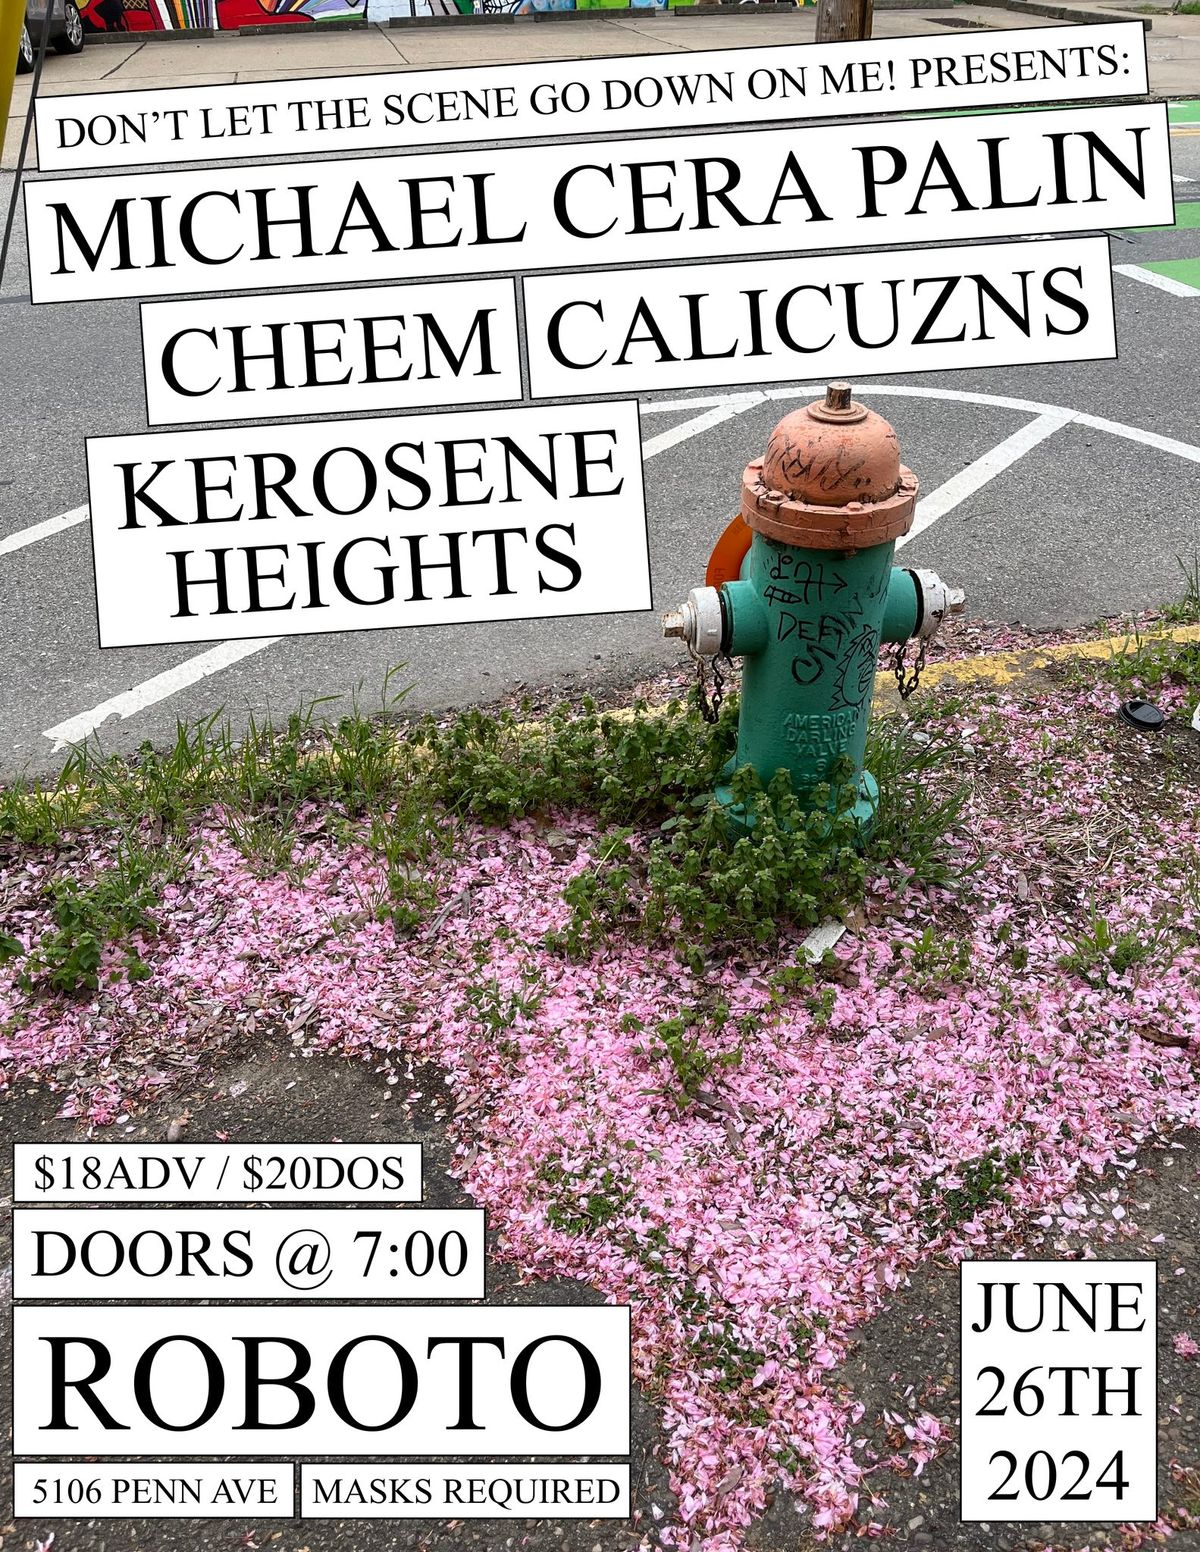 Michael Cera Palin w\/ Cheem + CaliCuzns + Kerosene Heights at Roboto